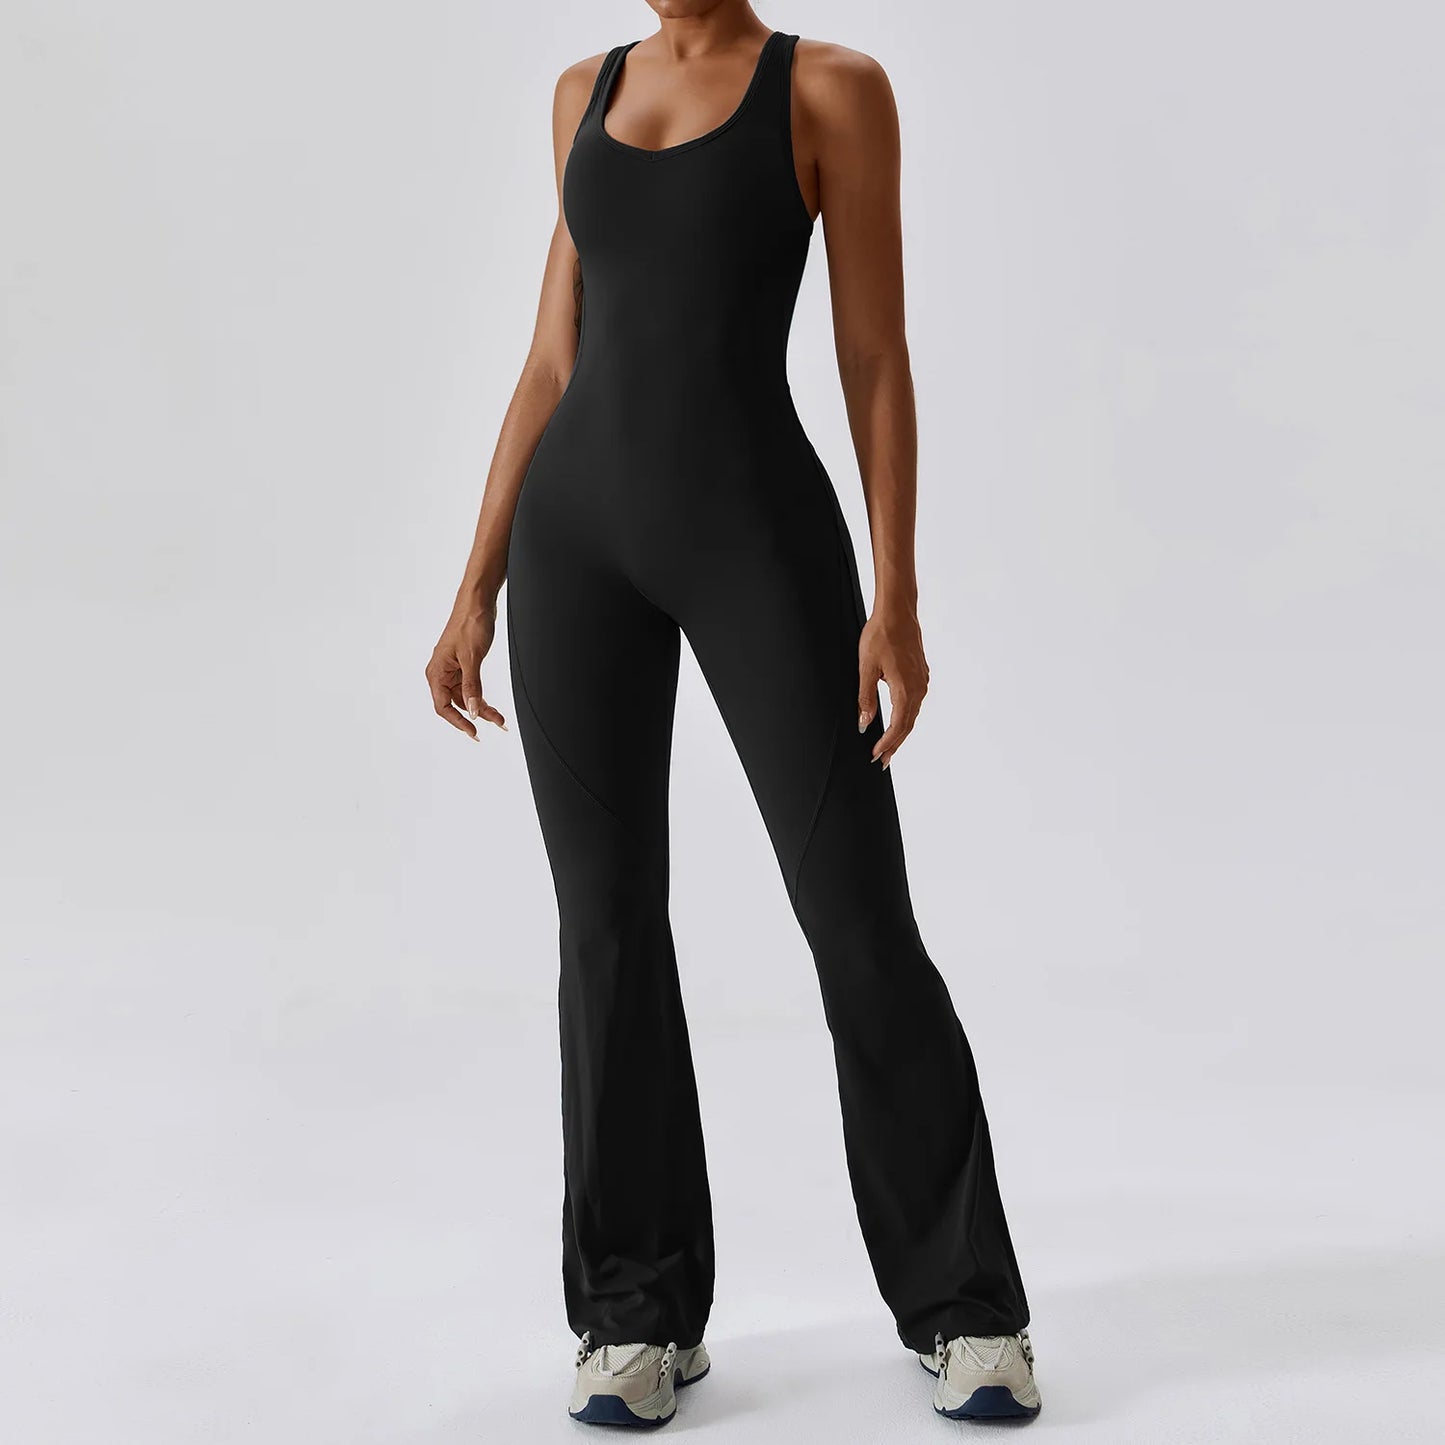 TEEK - Free Feeling Stretch Bodysuit JUMPSUIT theteekdotcom Black S 